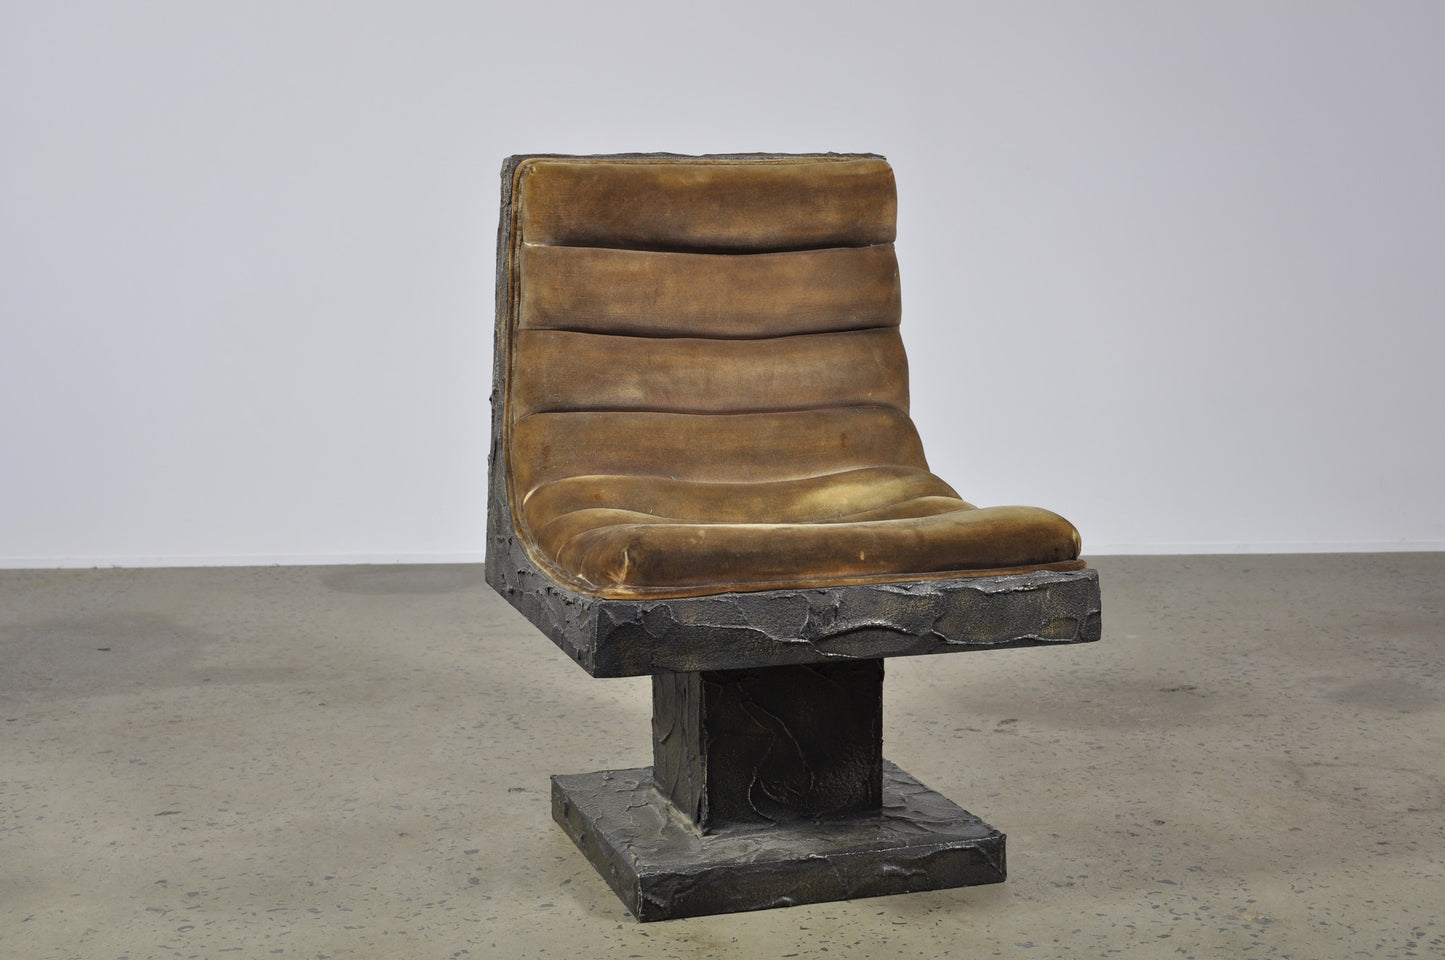 Paul Evans sculptured bronze chair - Case 22